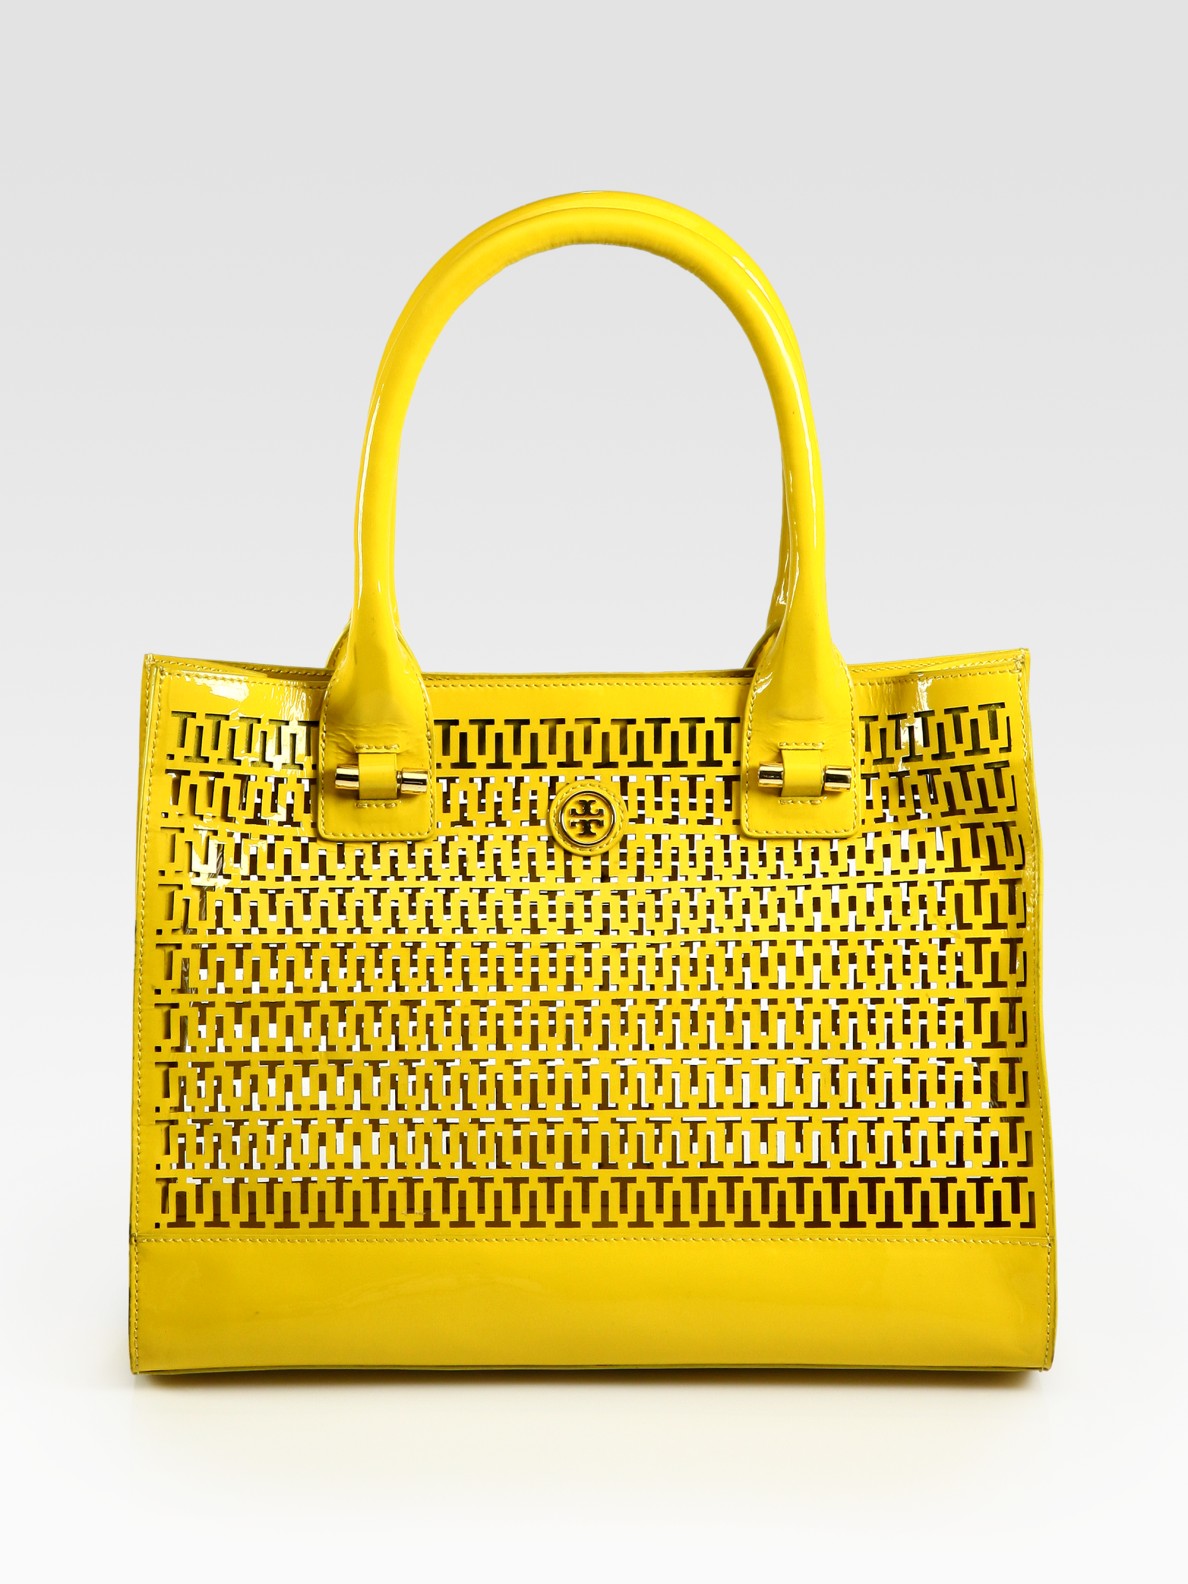 Lyst - Tory Burch Mini Georgiana Patent Leather Tote Bag in Yellow